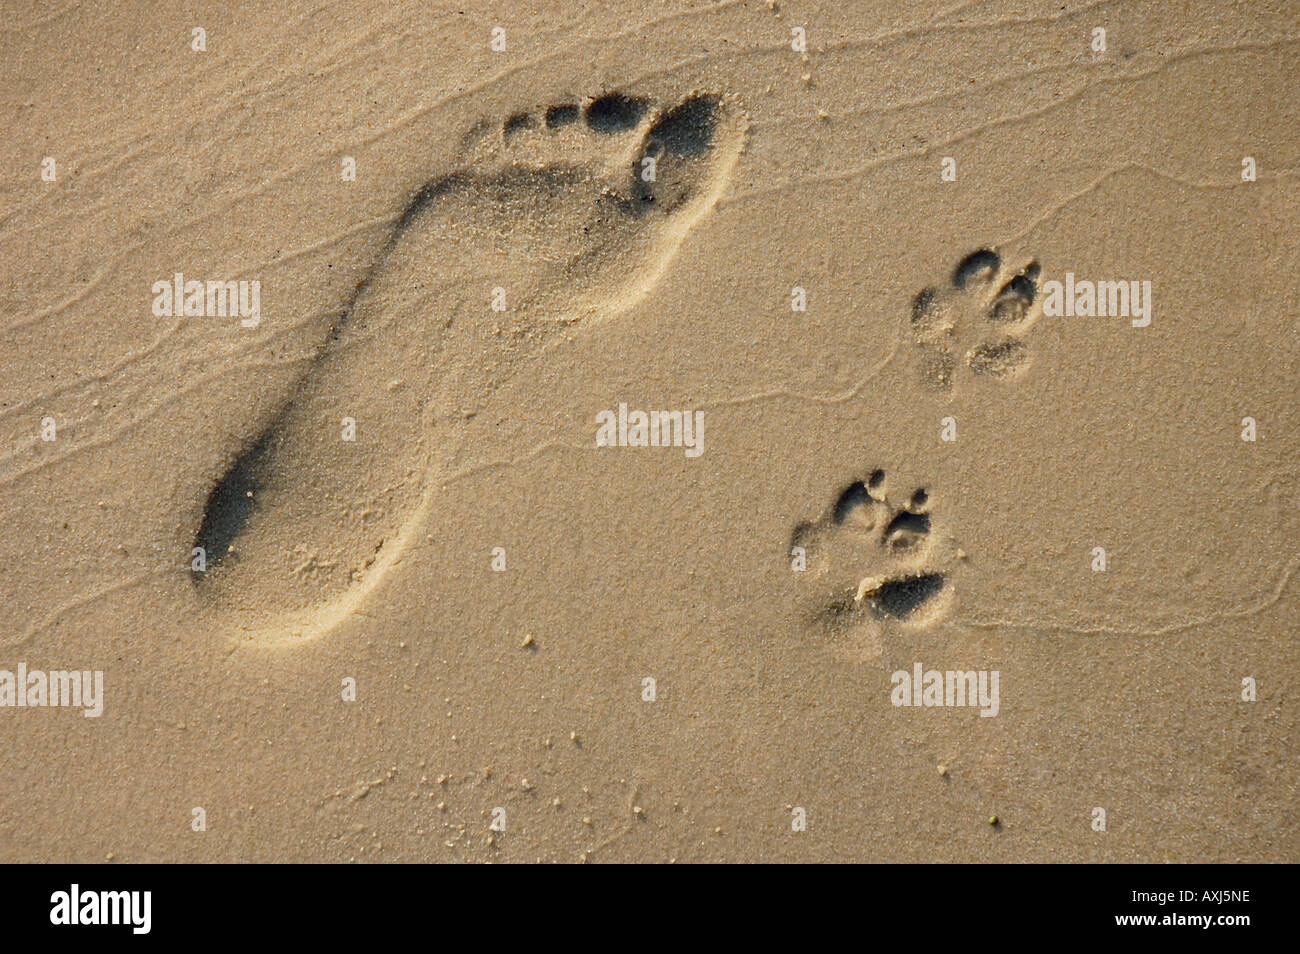 Human and dog footprints on sand Stock Photo